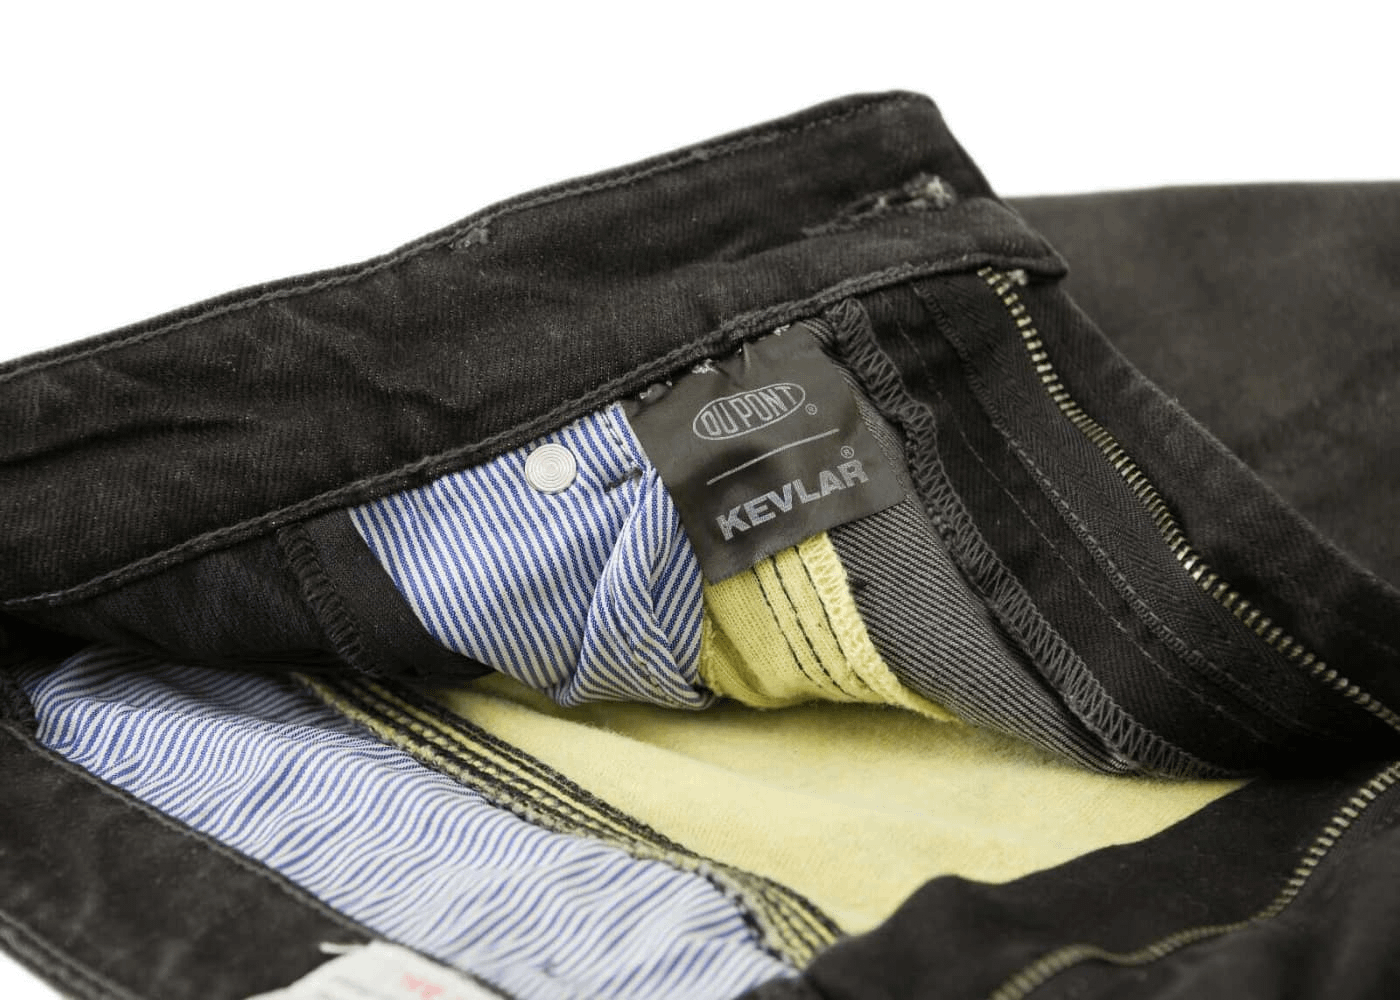 DuPont Kevlar lining of the RHOK Gen3 jeans